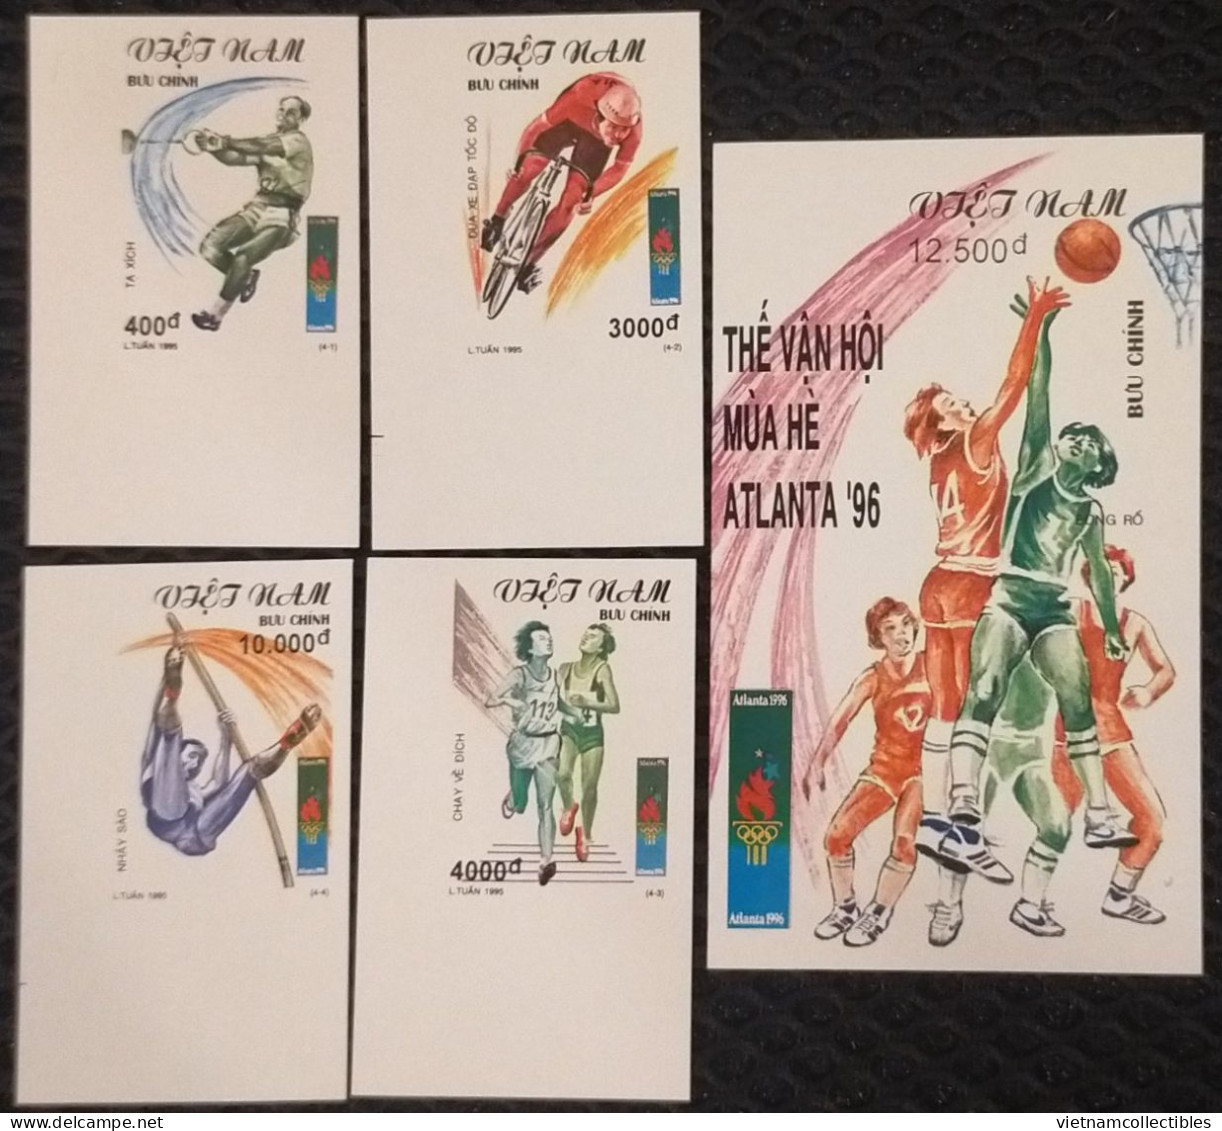 Vietnam Viet Nam MNH Imperf Stamps & SS 1995 : Summer Olympic Games / Bike / Bicycle / Running / Basketball (Ms704) - Vietnam